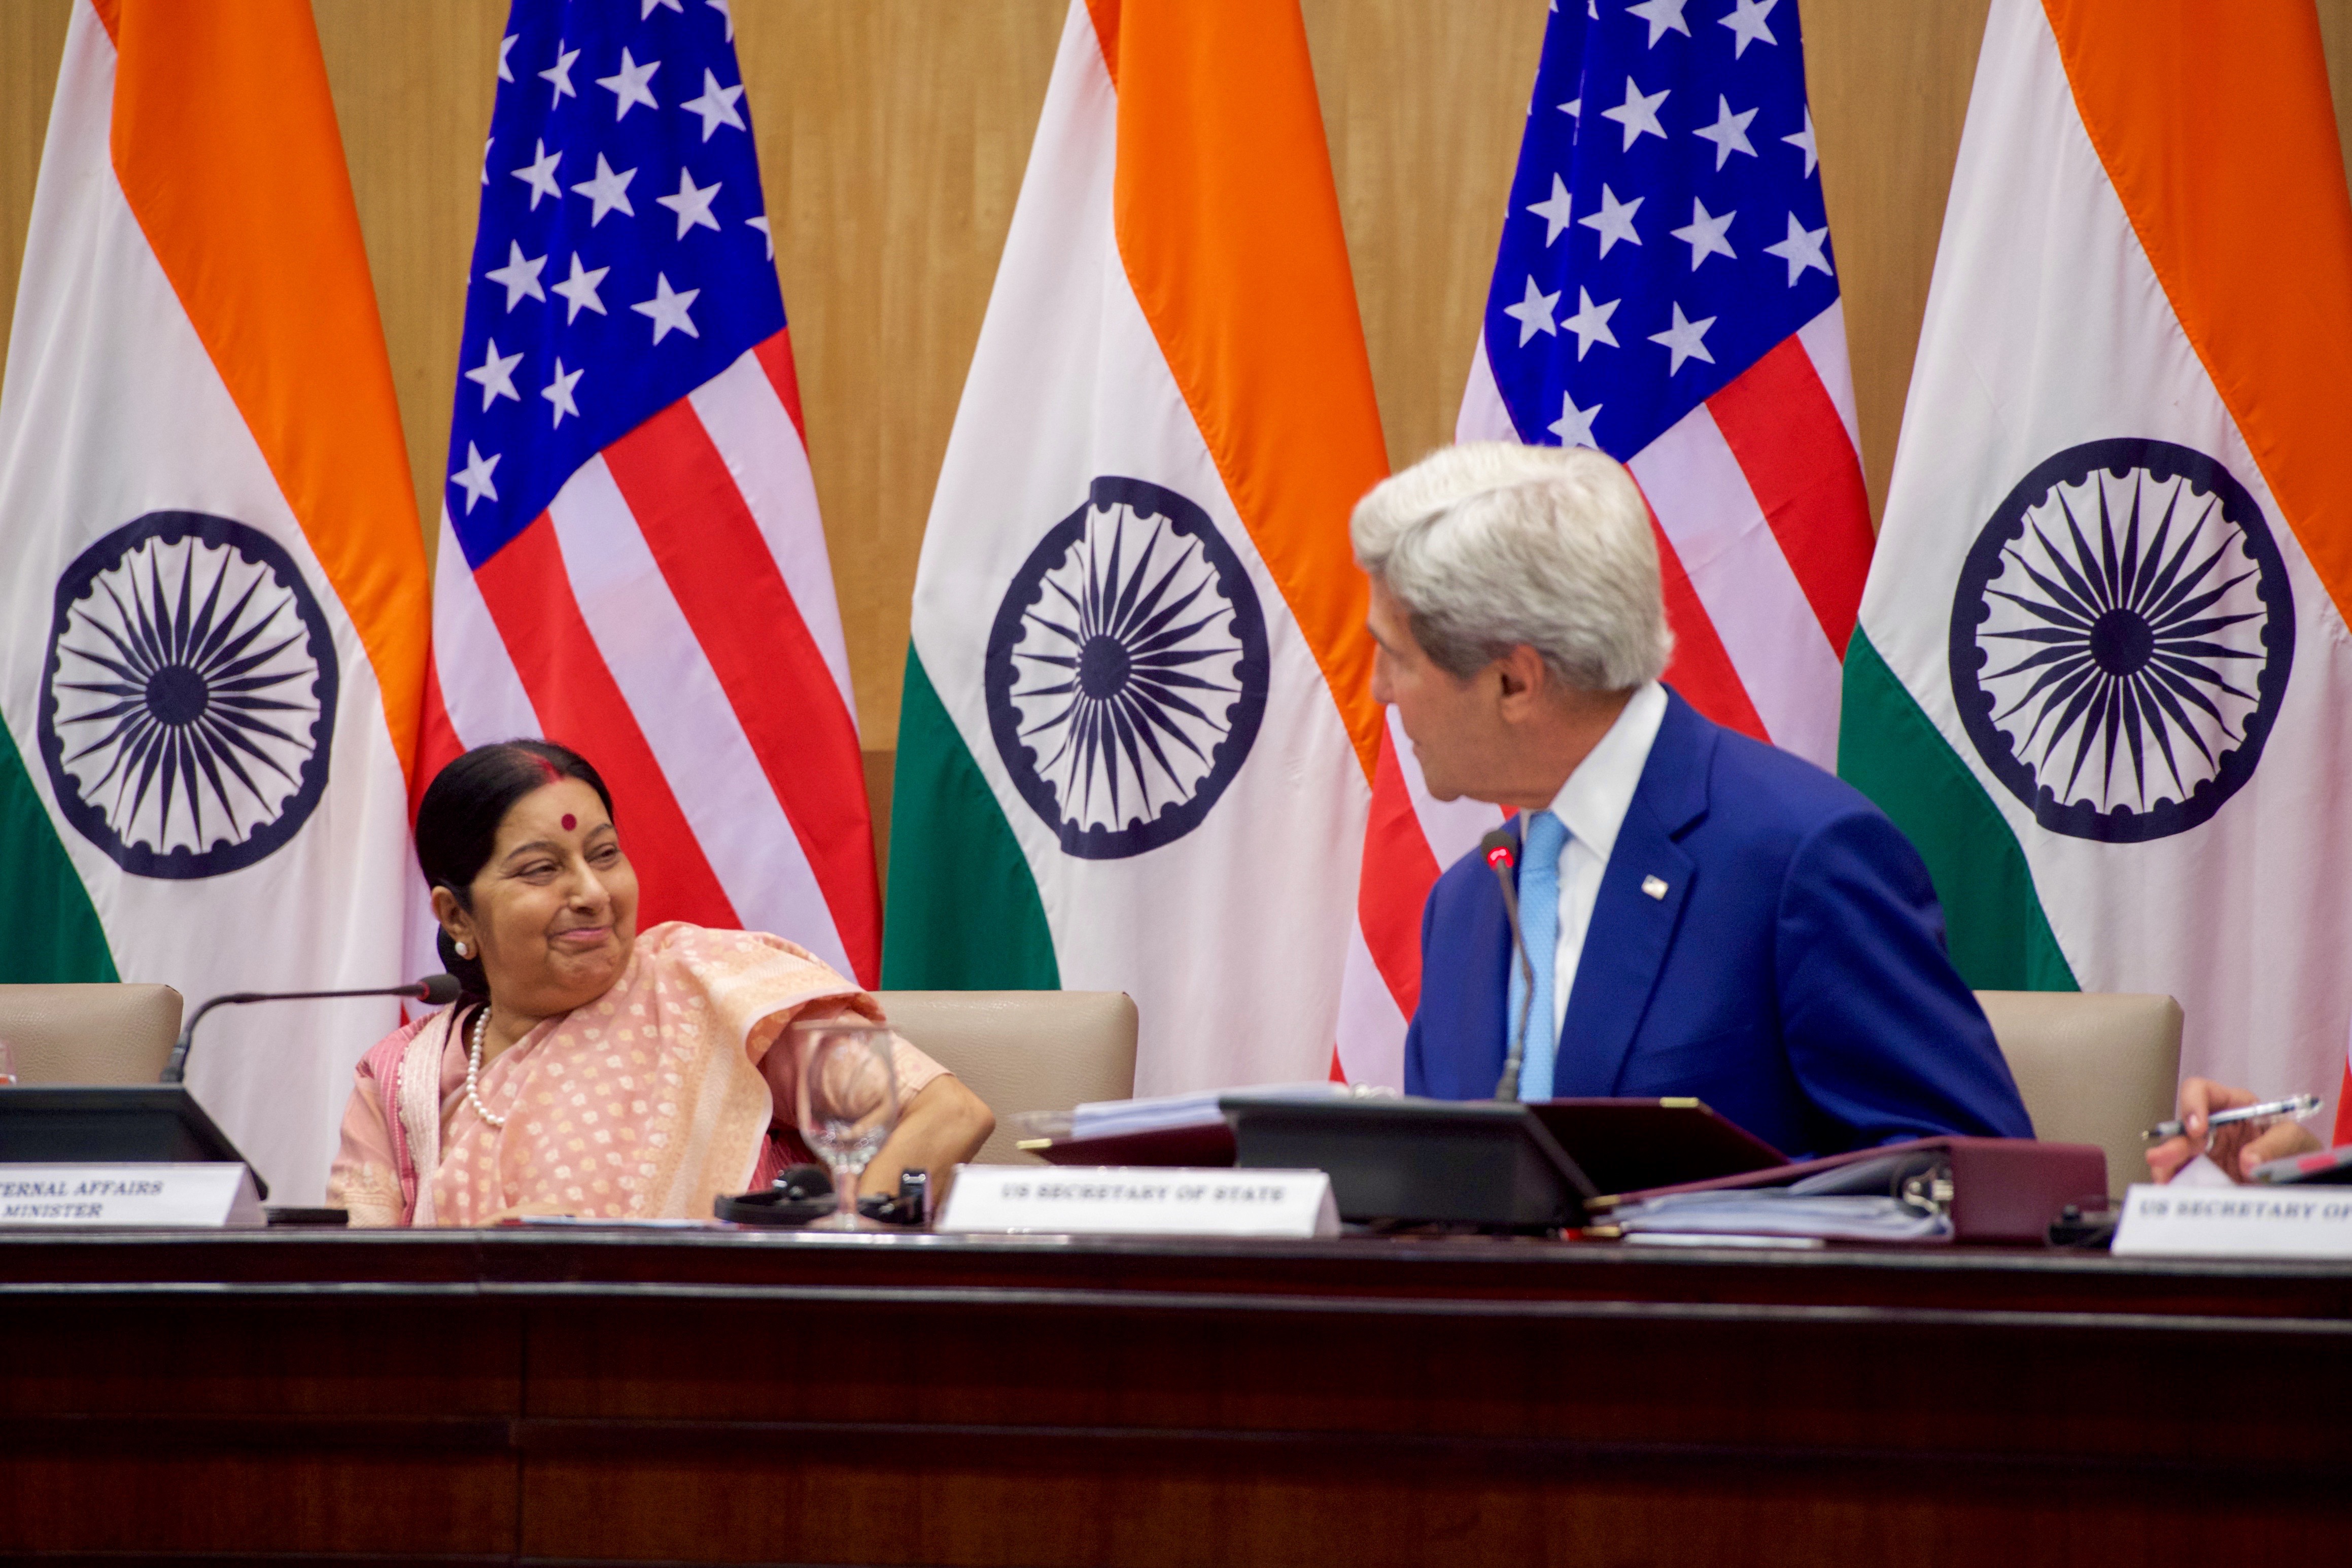 Kerry and Swaraj